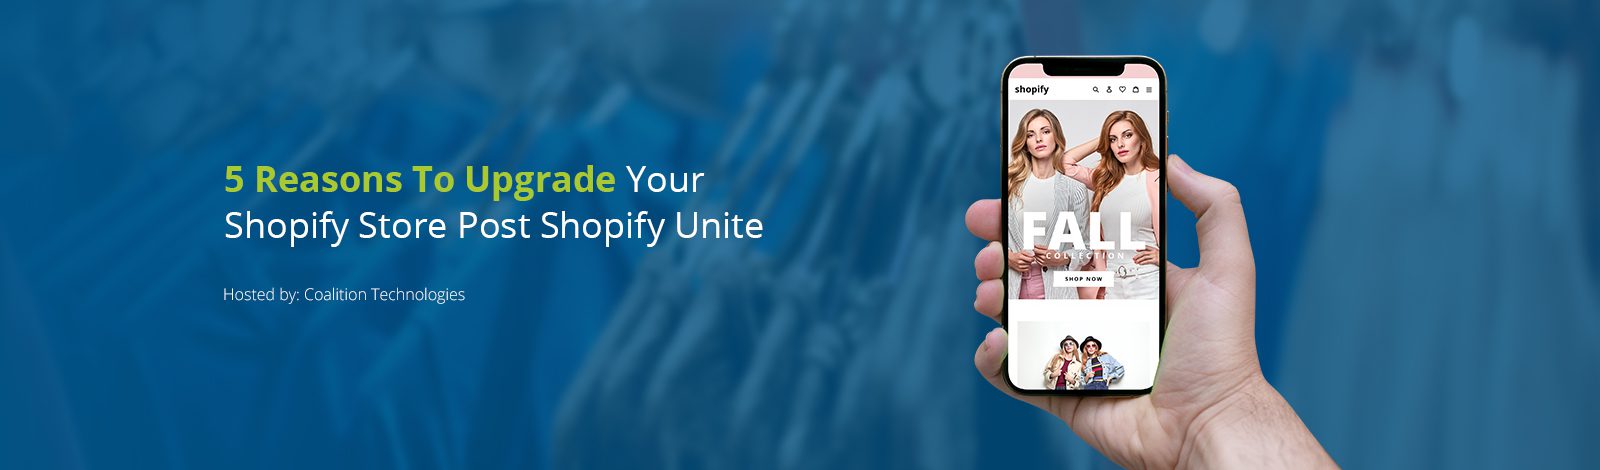 upgrade-shopify-store-post-shopify-unite